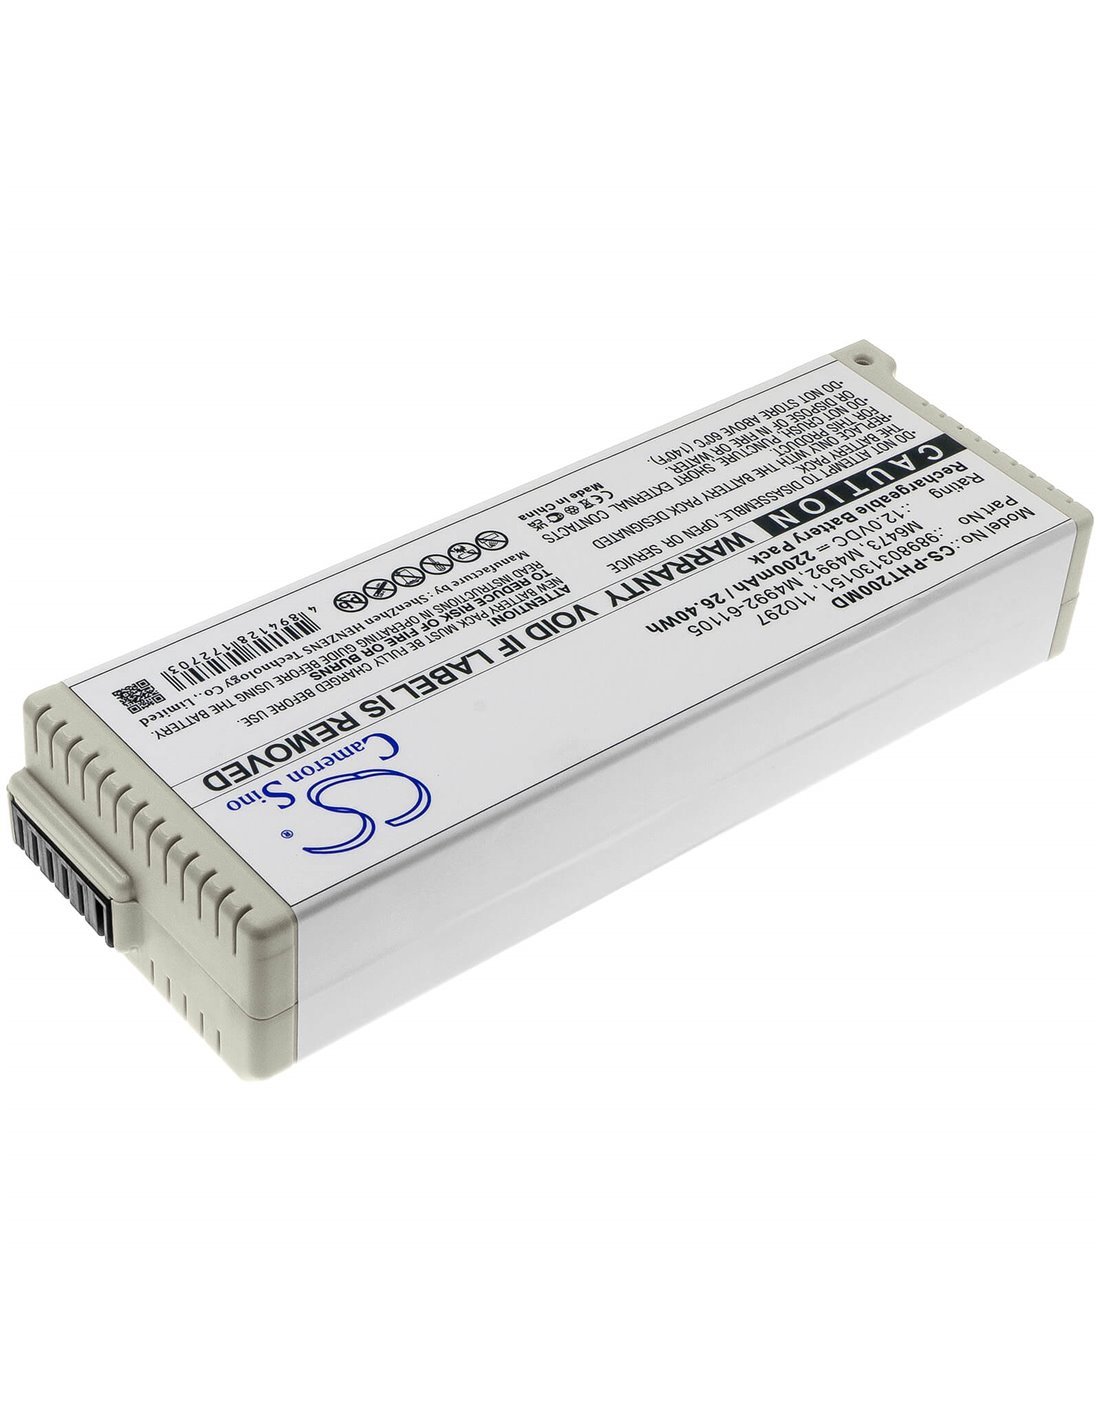 12.0V, 2200mAh, Sealed Lead Acid Battery fits Philips, Ecg Pagewriter Trim I, Pagewriter Trim 2, 26.40Wh